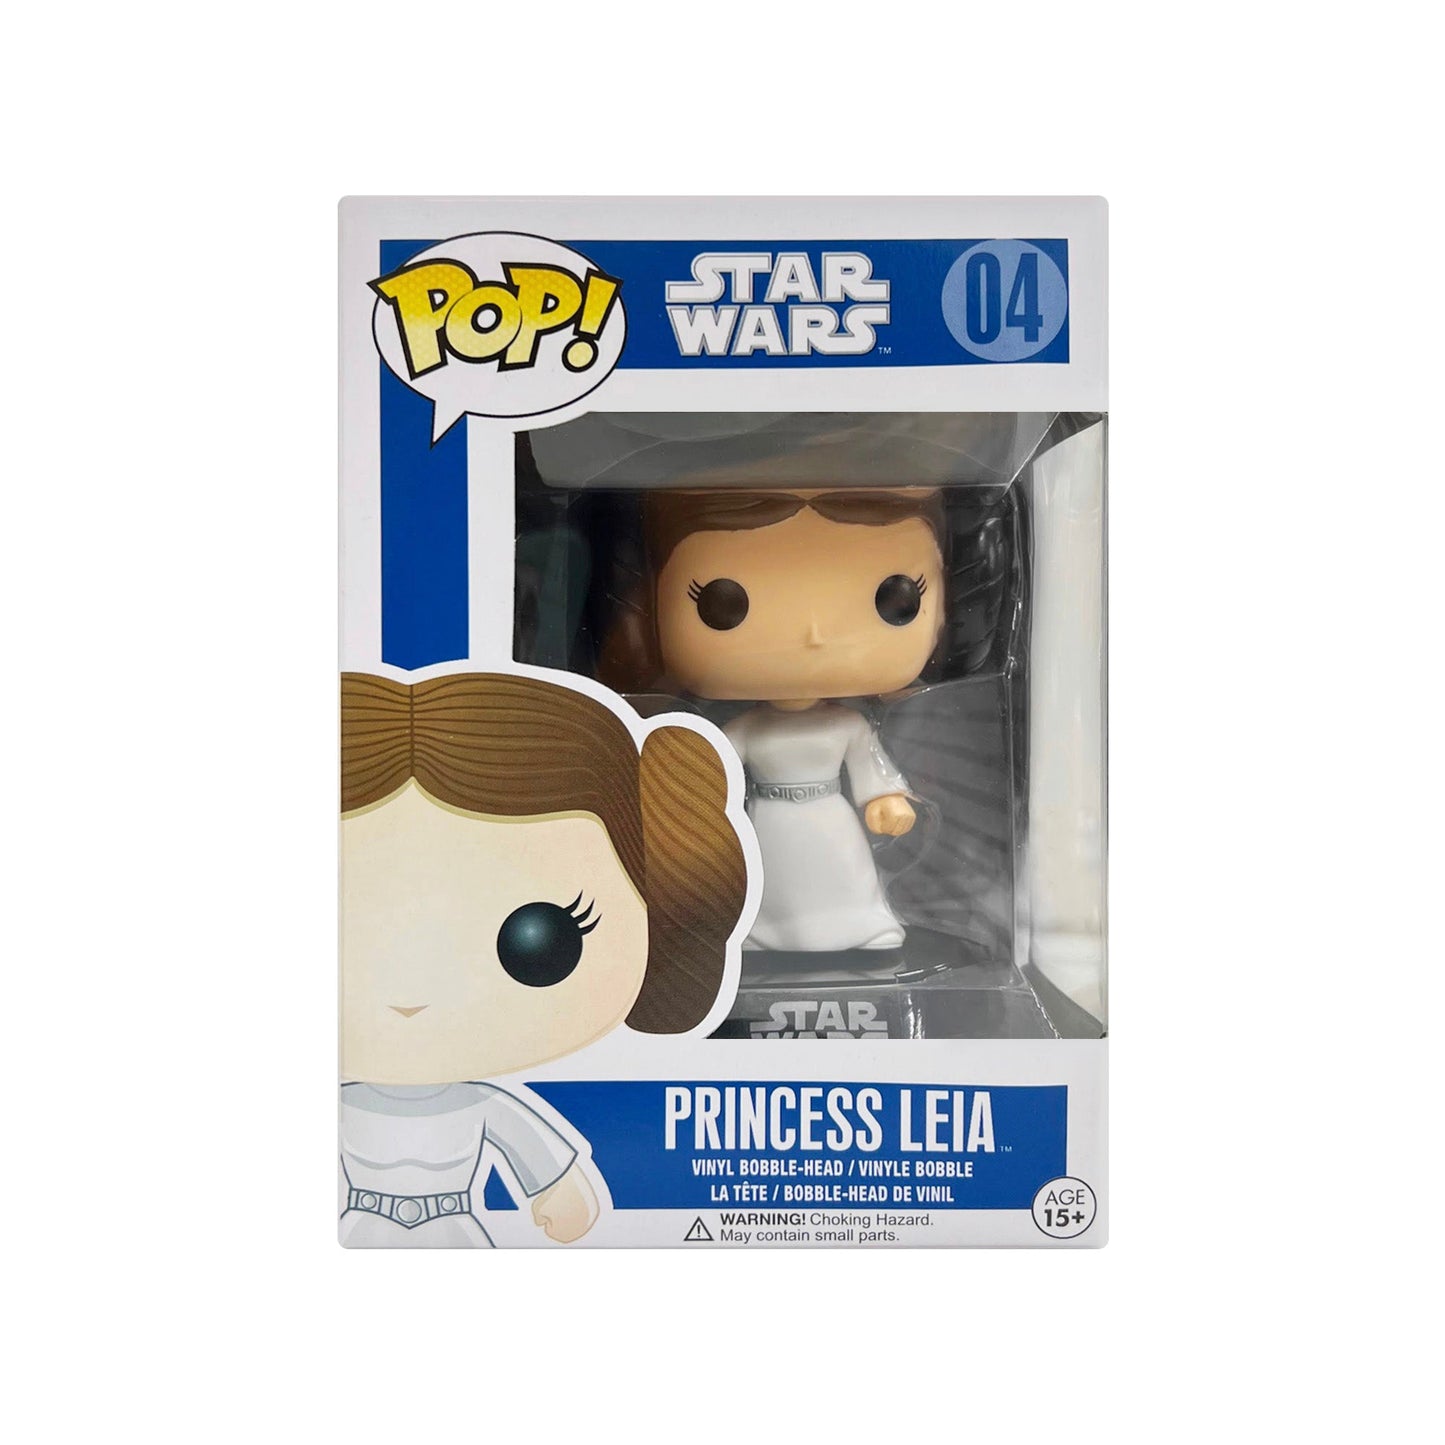 Star Wars - Princess Leia [Blue Box] #04